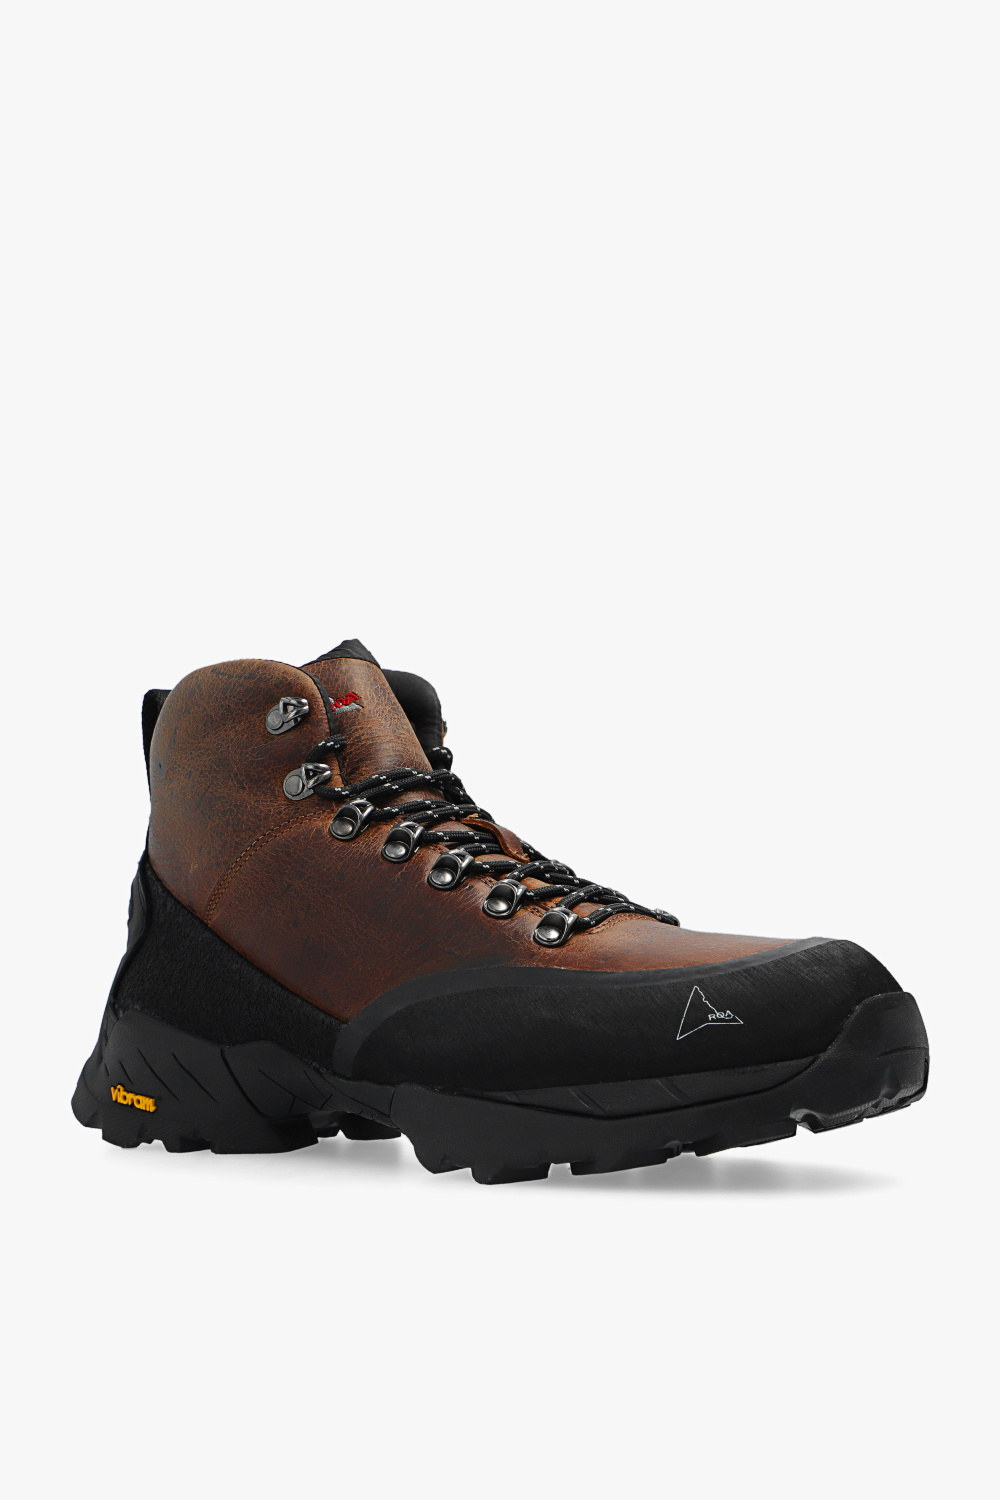 ROA ‘Andreas’ trekking boots